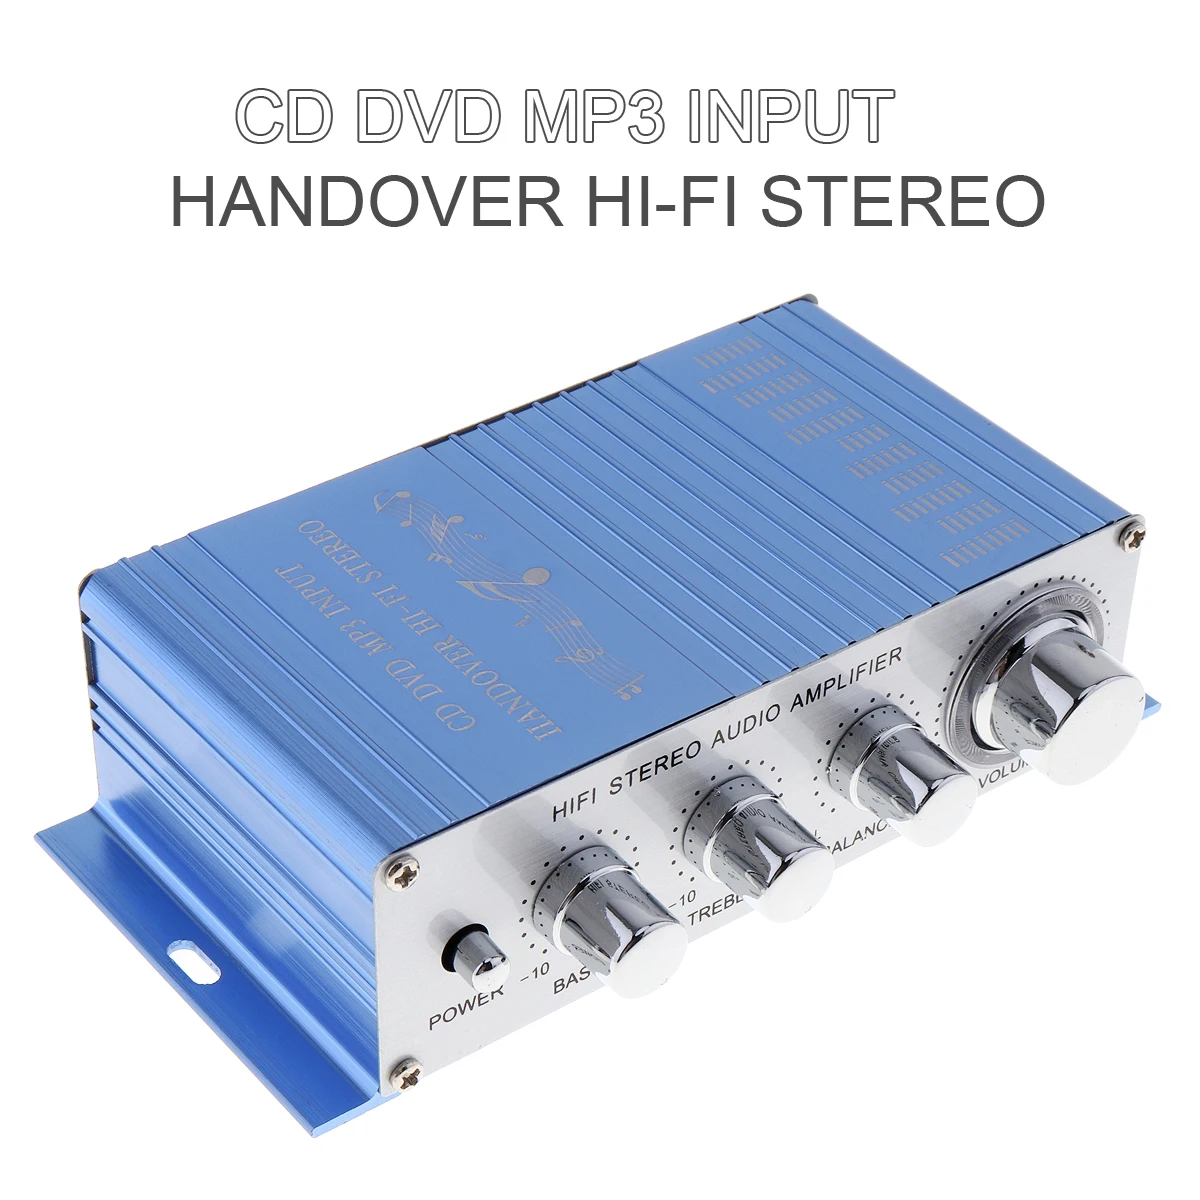 

12V Mini Hi-Fi Car Stereo Amplifier 2 Channel Auto Audio Digital Amplifier RMS 20W + 10W Sound CD DVD MP3 Input for Car Home